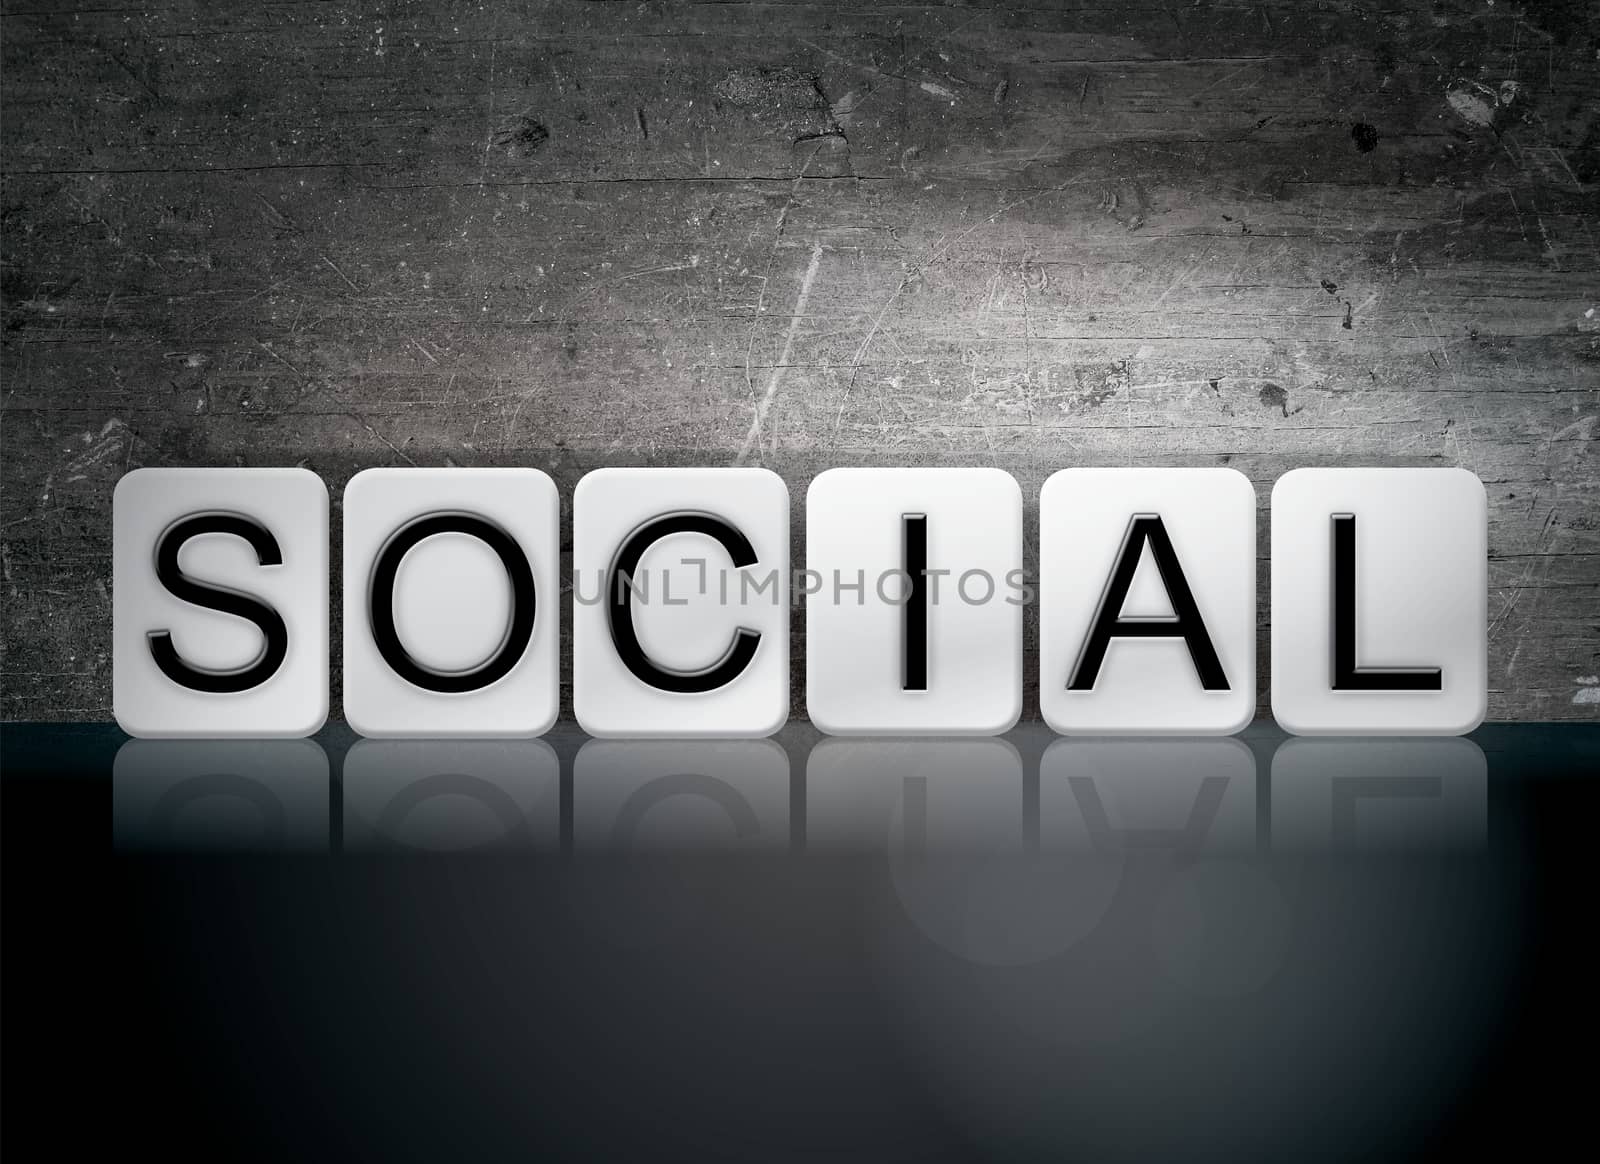 The word "Social" written in white tiles against a dark vintage grunge background.